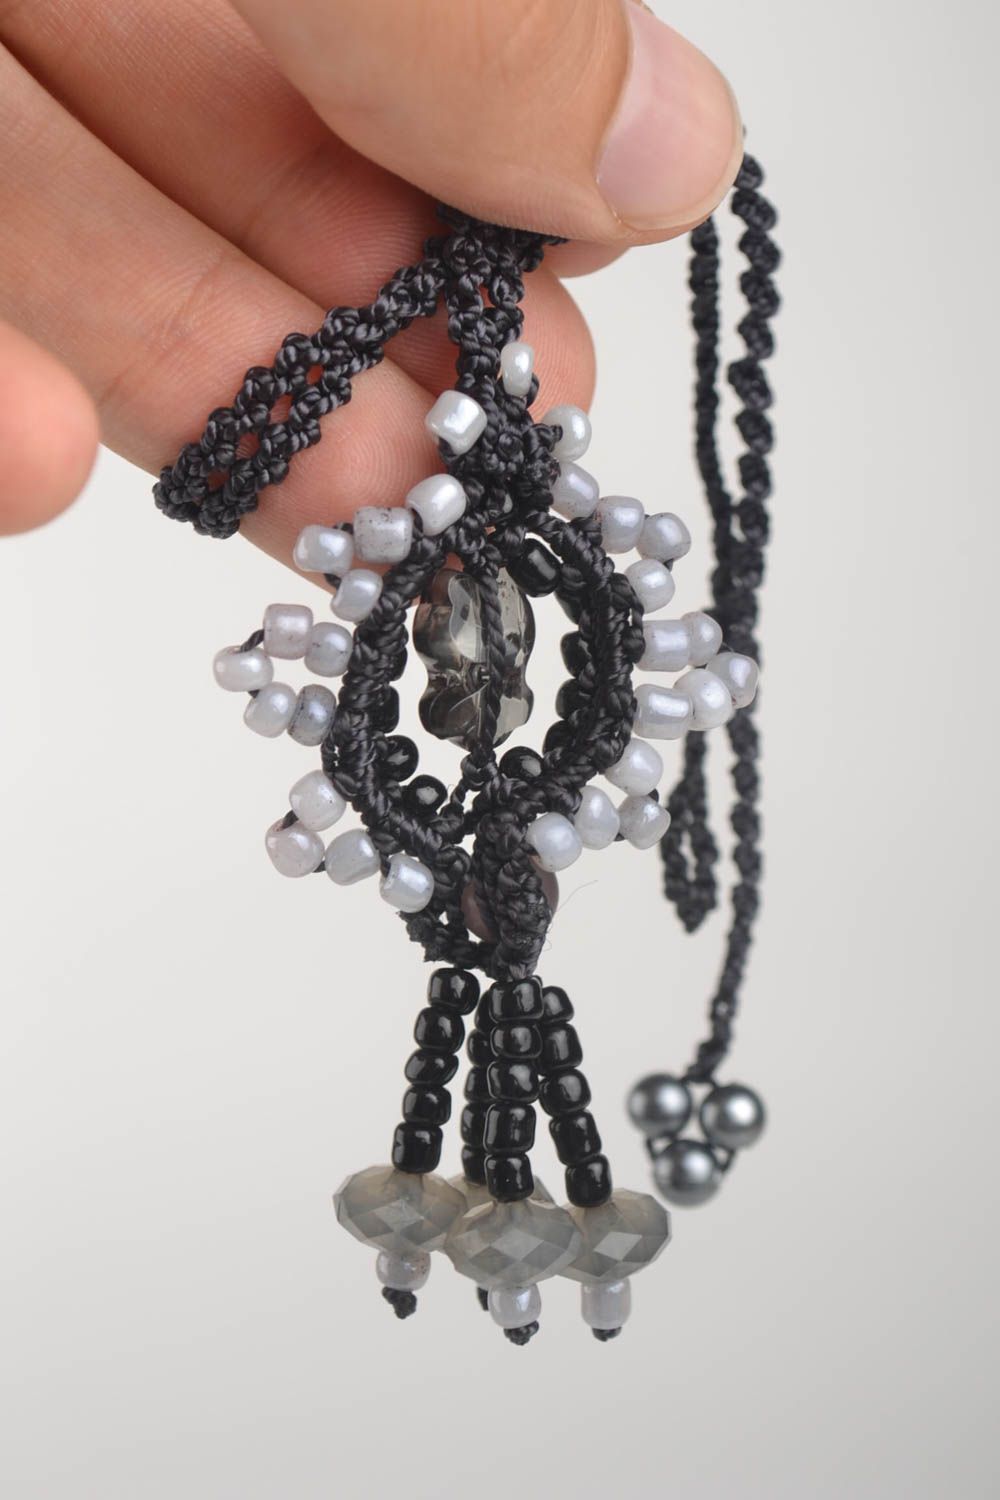 Handmade pendant unusual pendant designer jewelry macrame pendant gift ideas photo 4